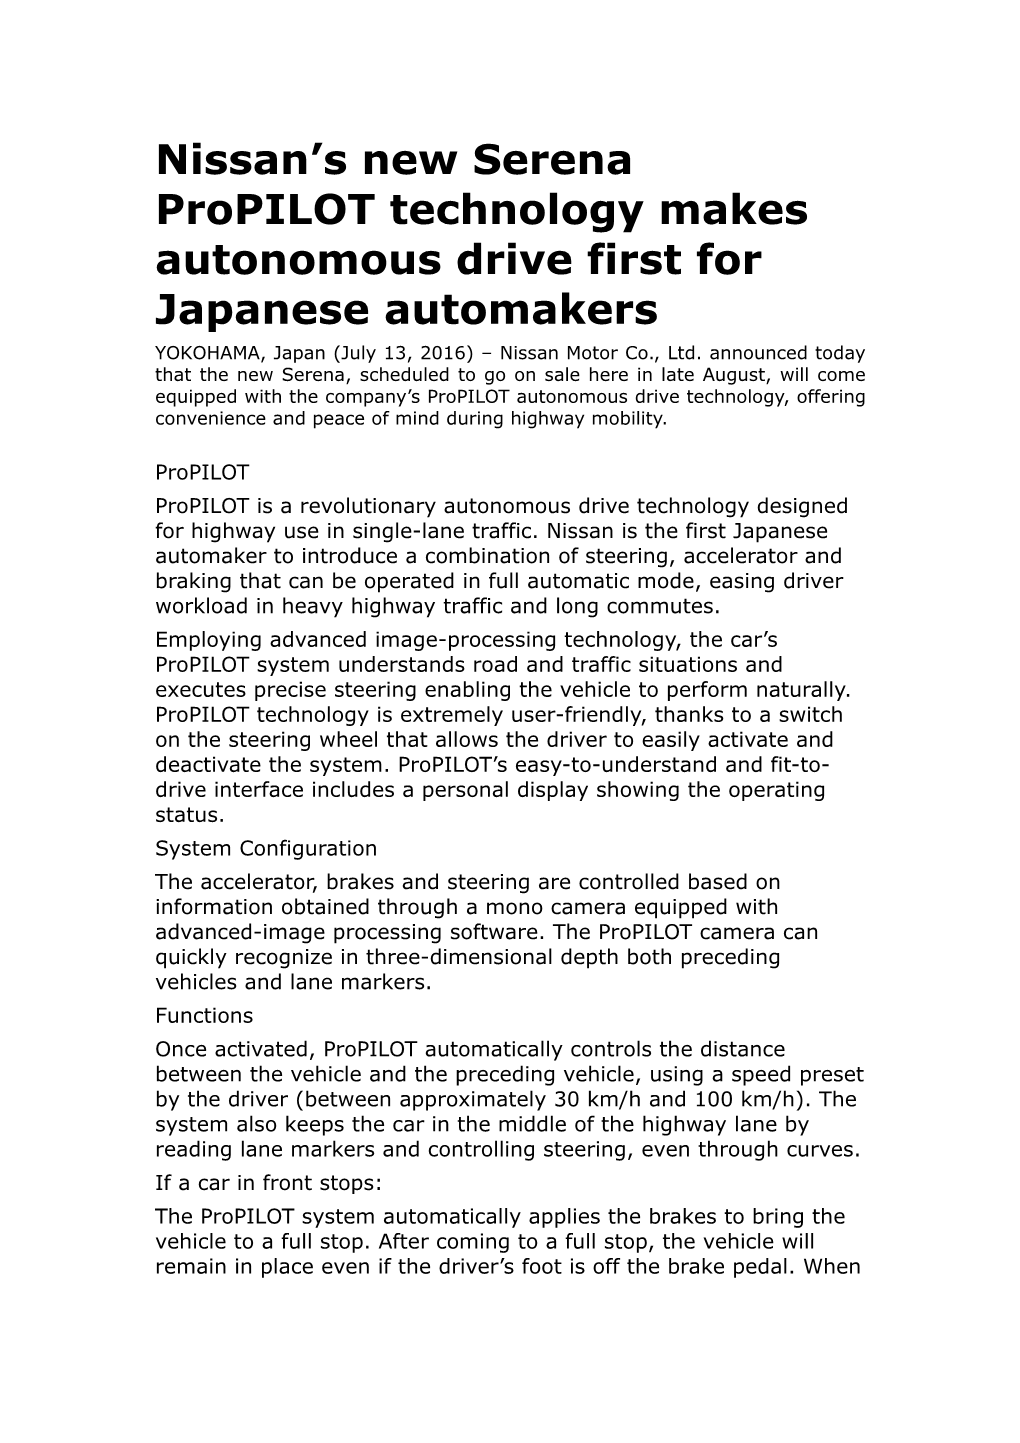 Nissan S New Serena Propilot Technology Makes Autonomous Drive First for Japanese Automakers